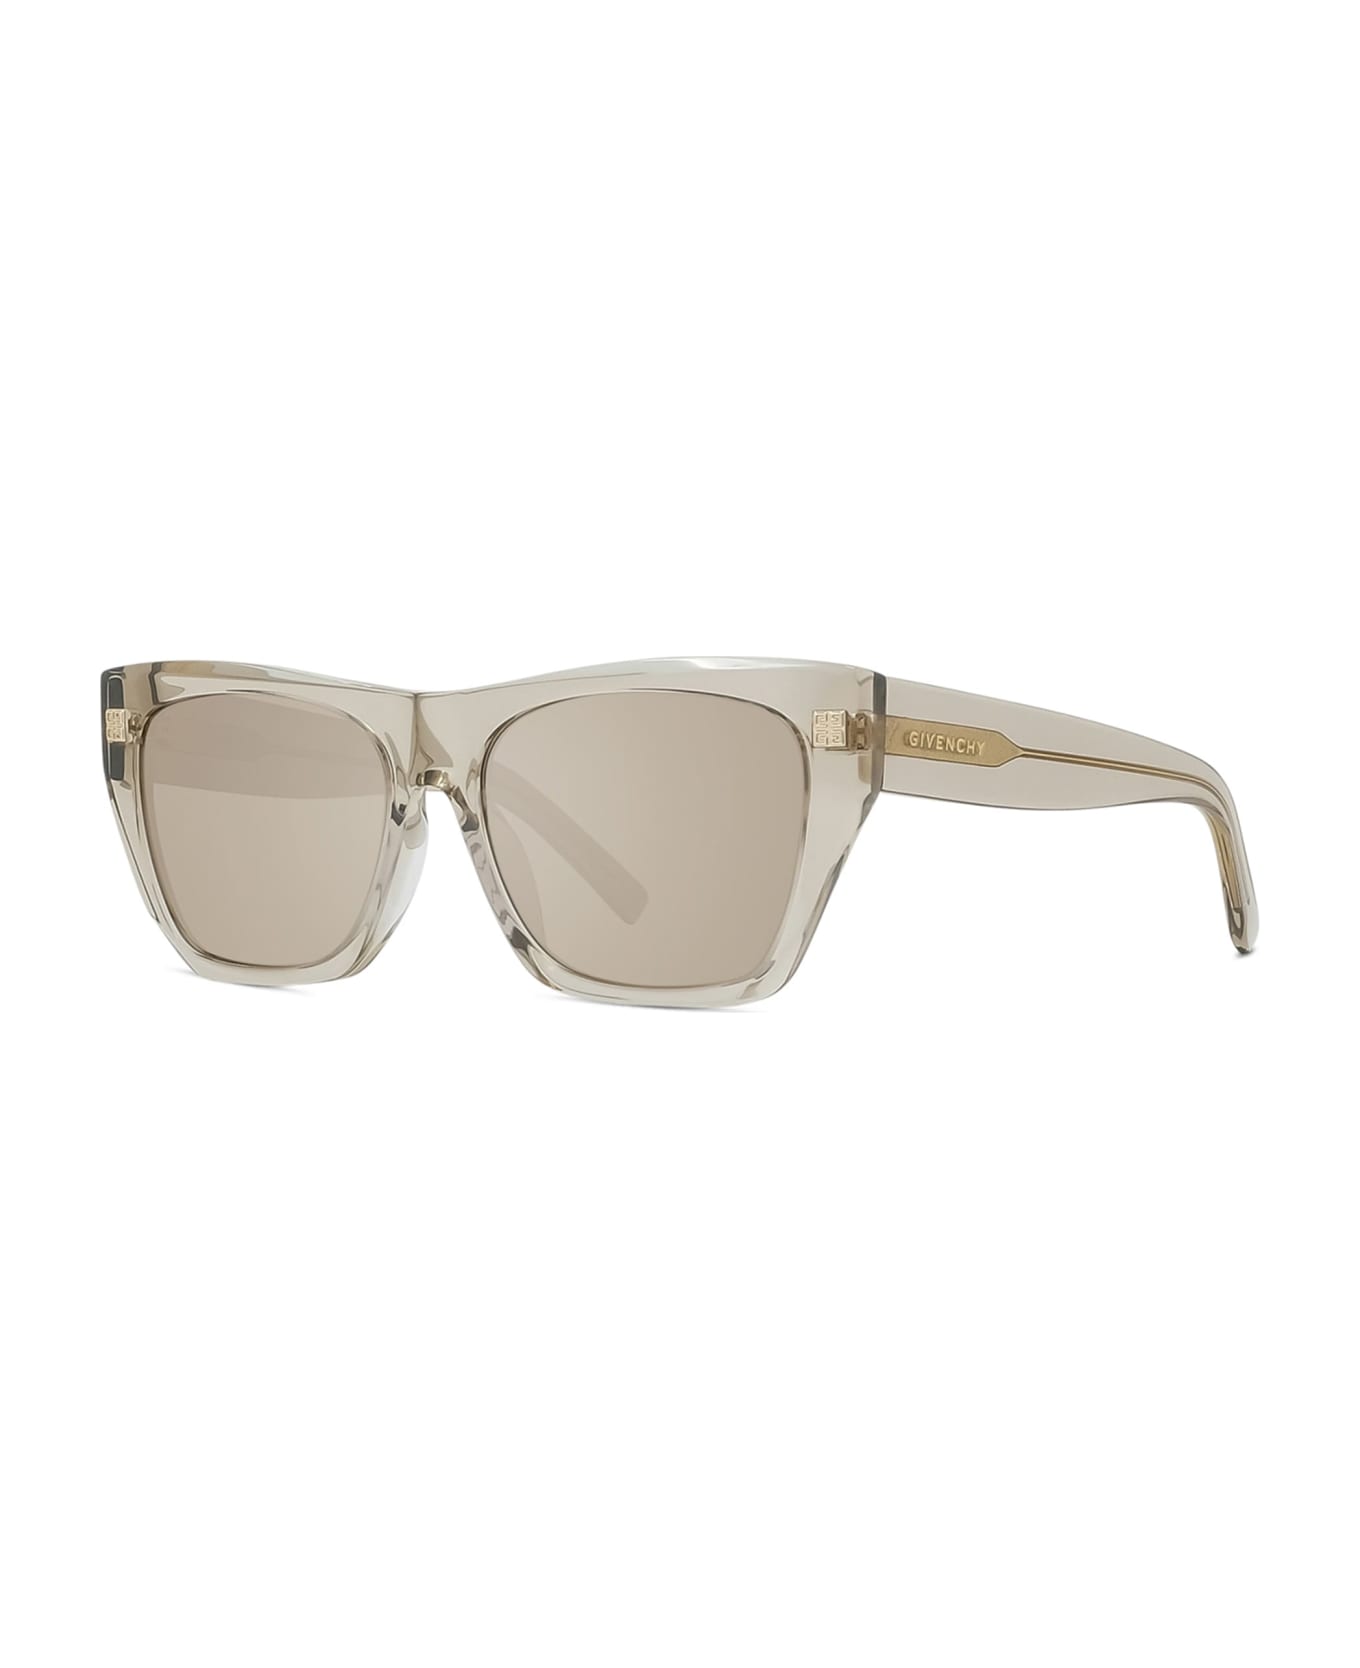 Givenchy Eyewear Gv40061u - Shiny Light Brow Sunglasses - brown